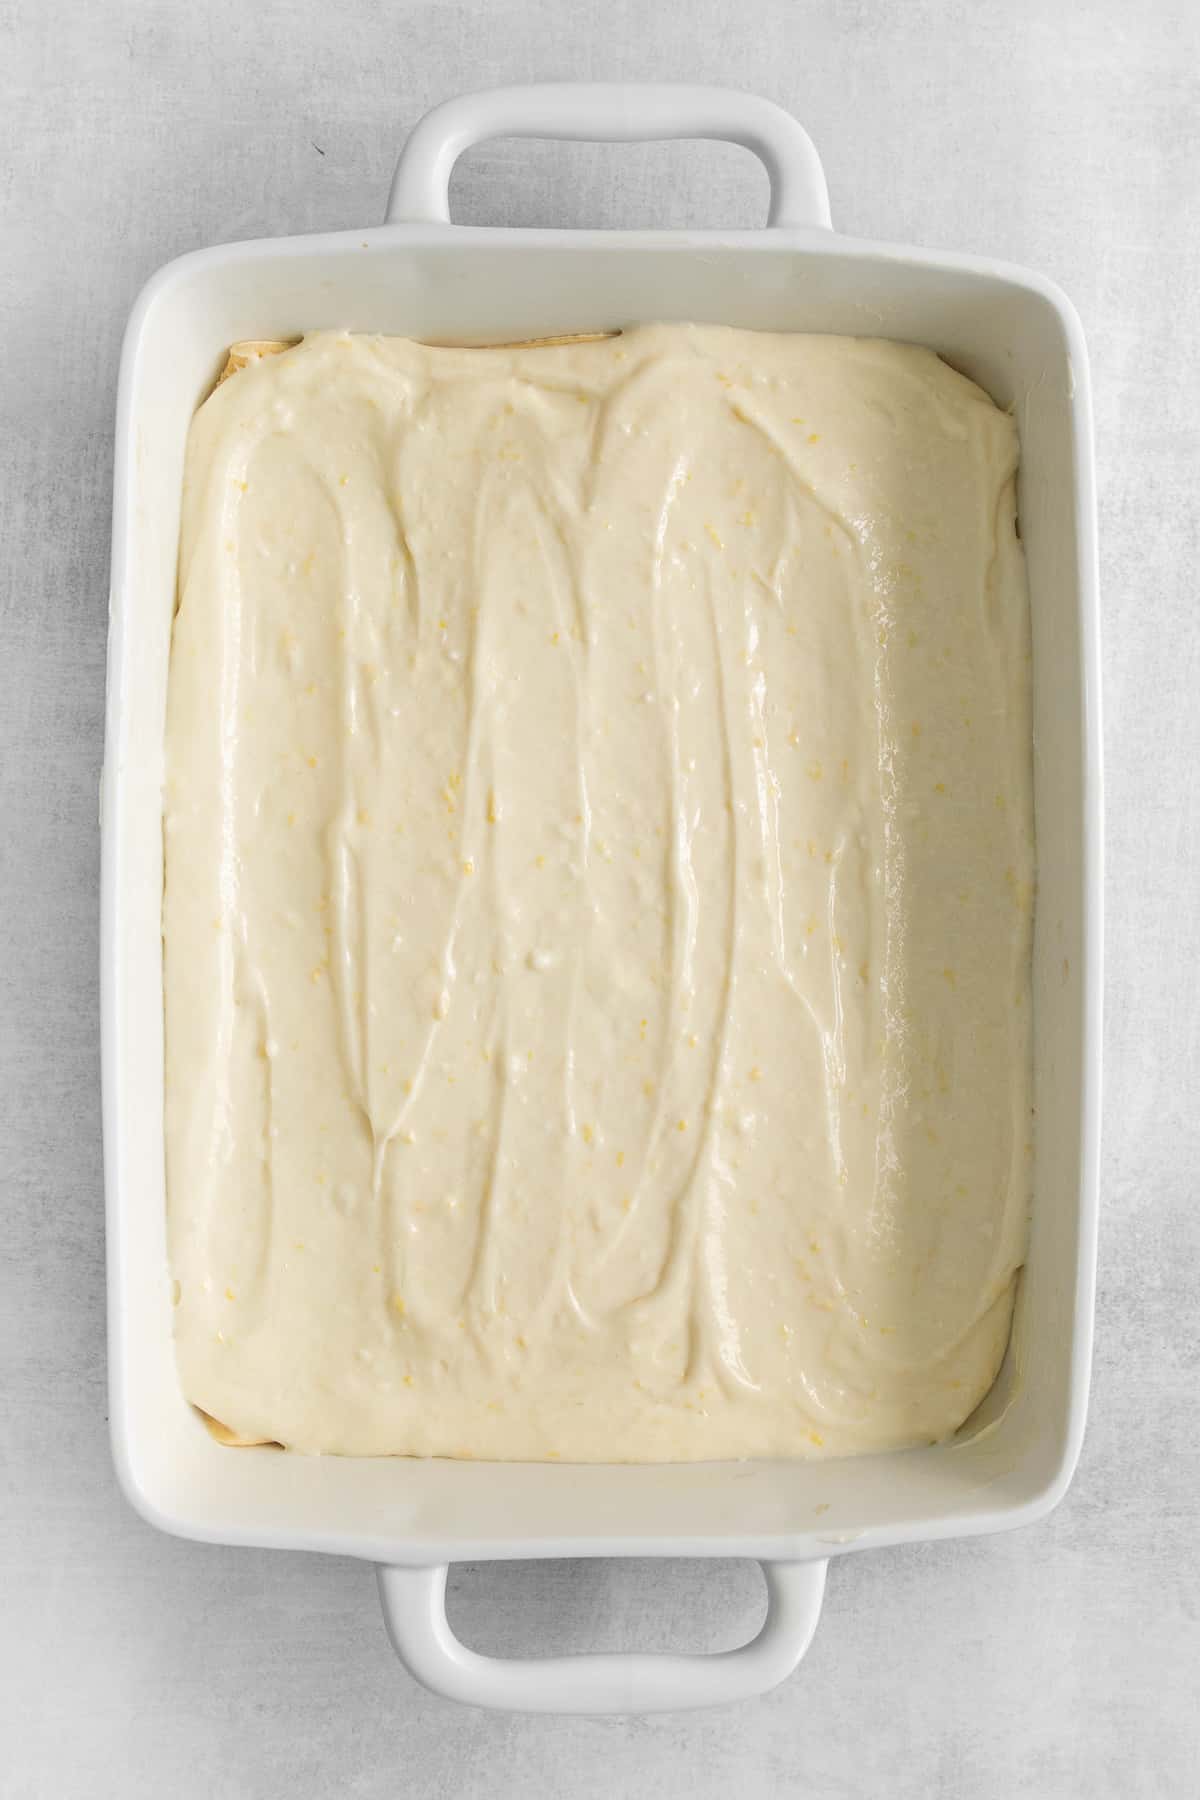 Crescent roll dough in a casserole dish.